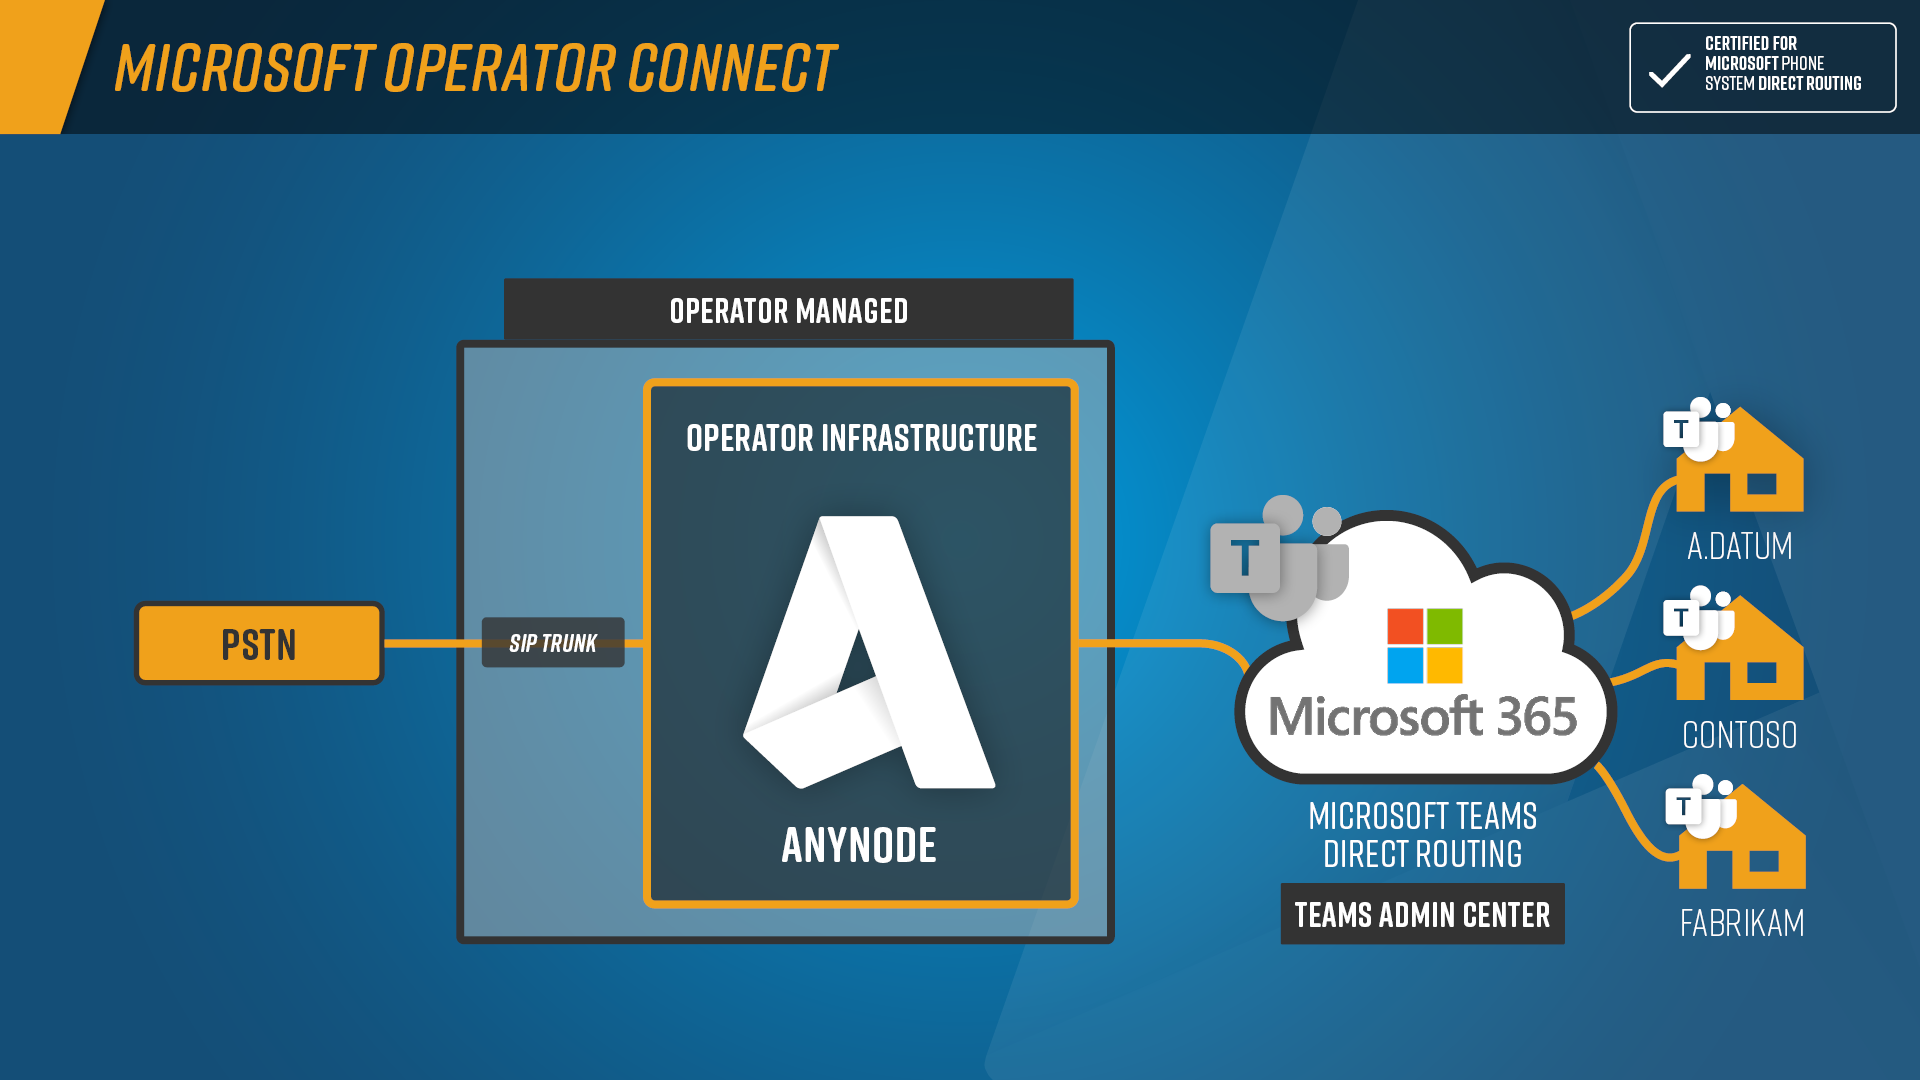 Microsoft Operator Connect diagram